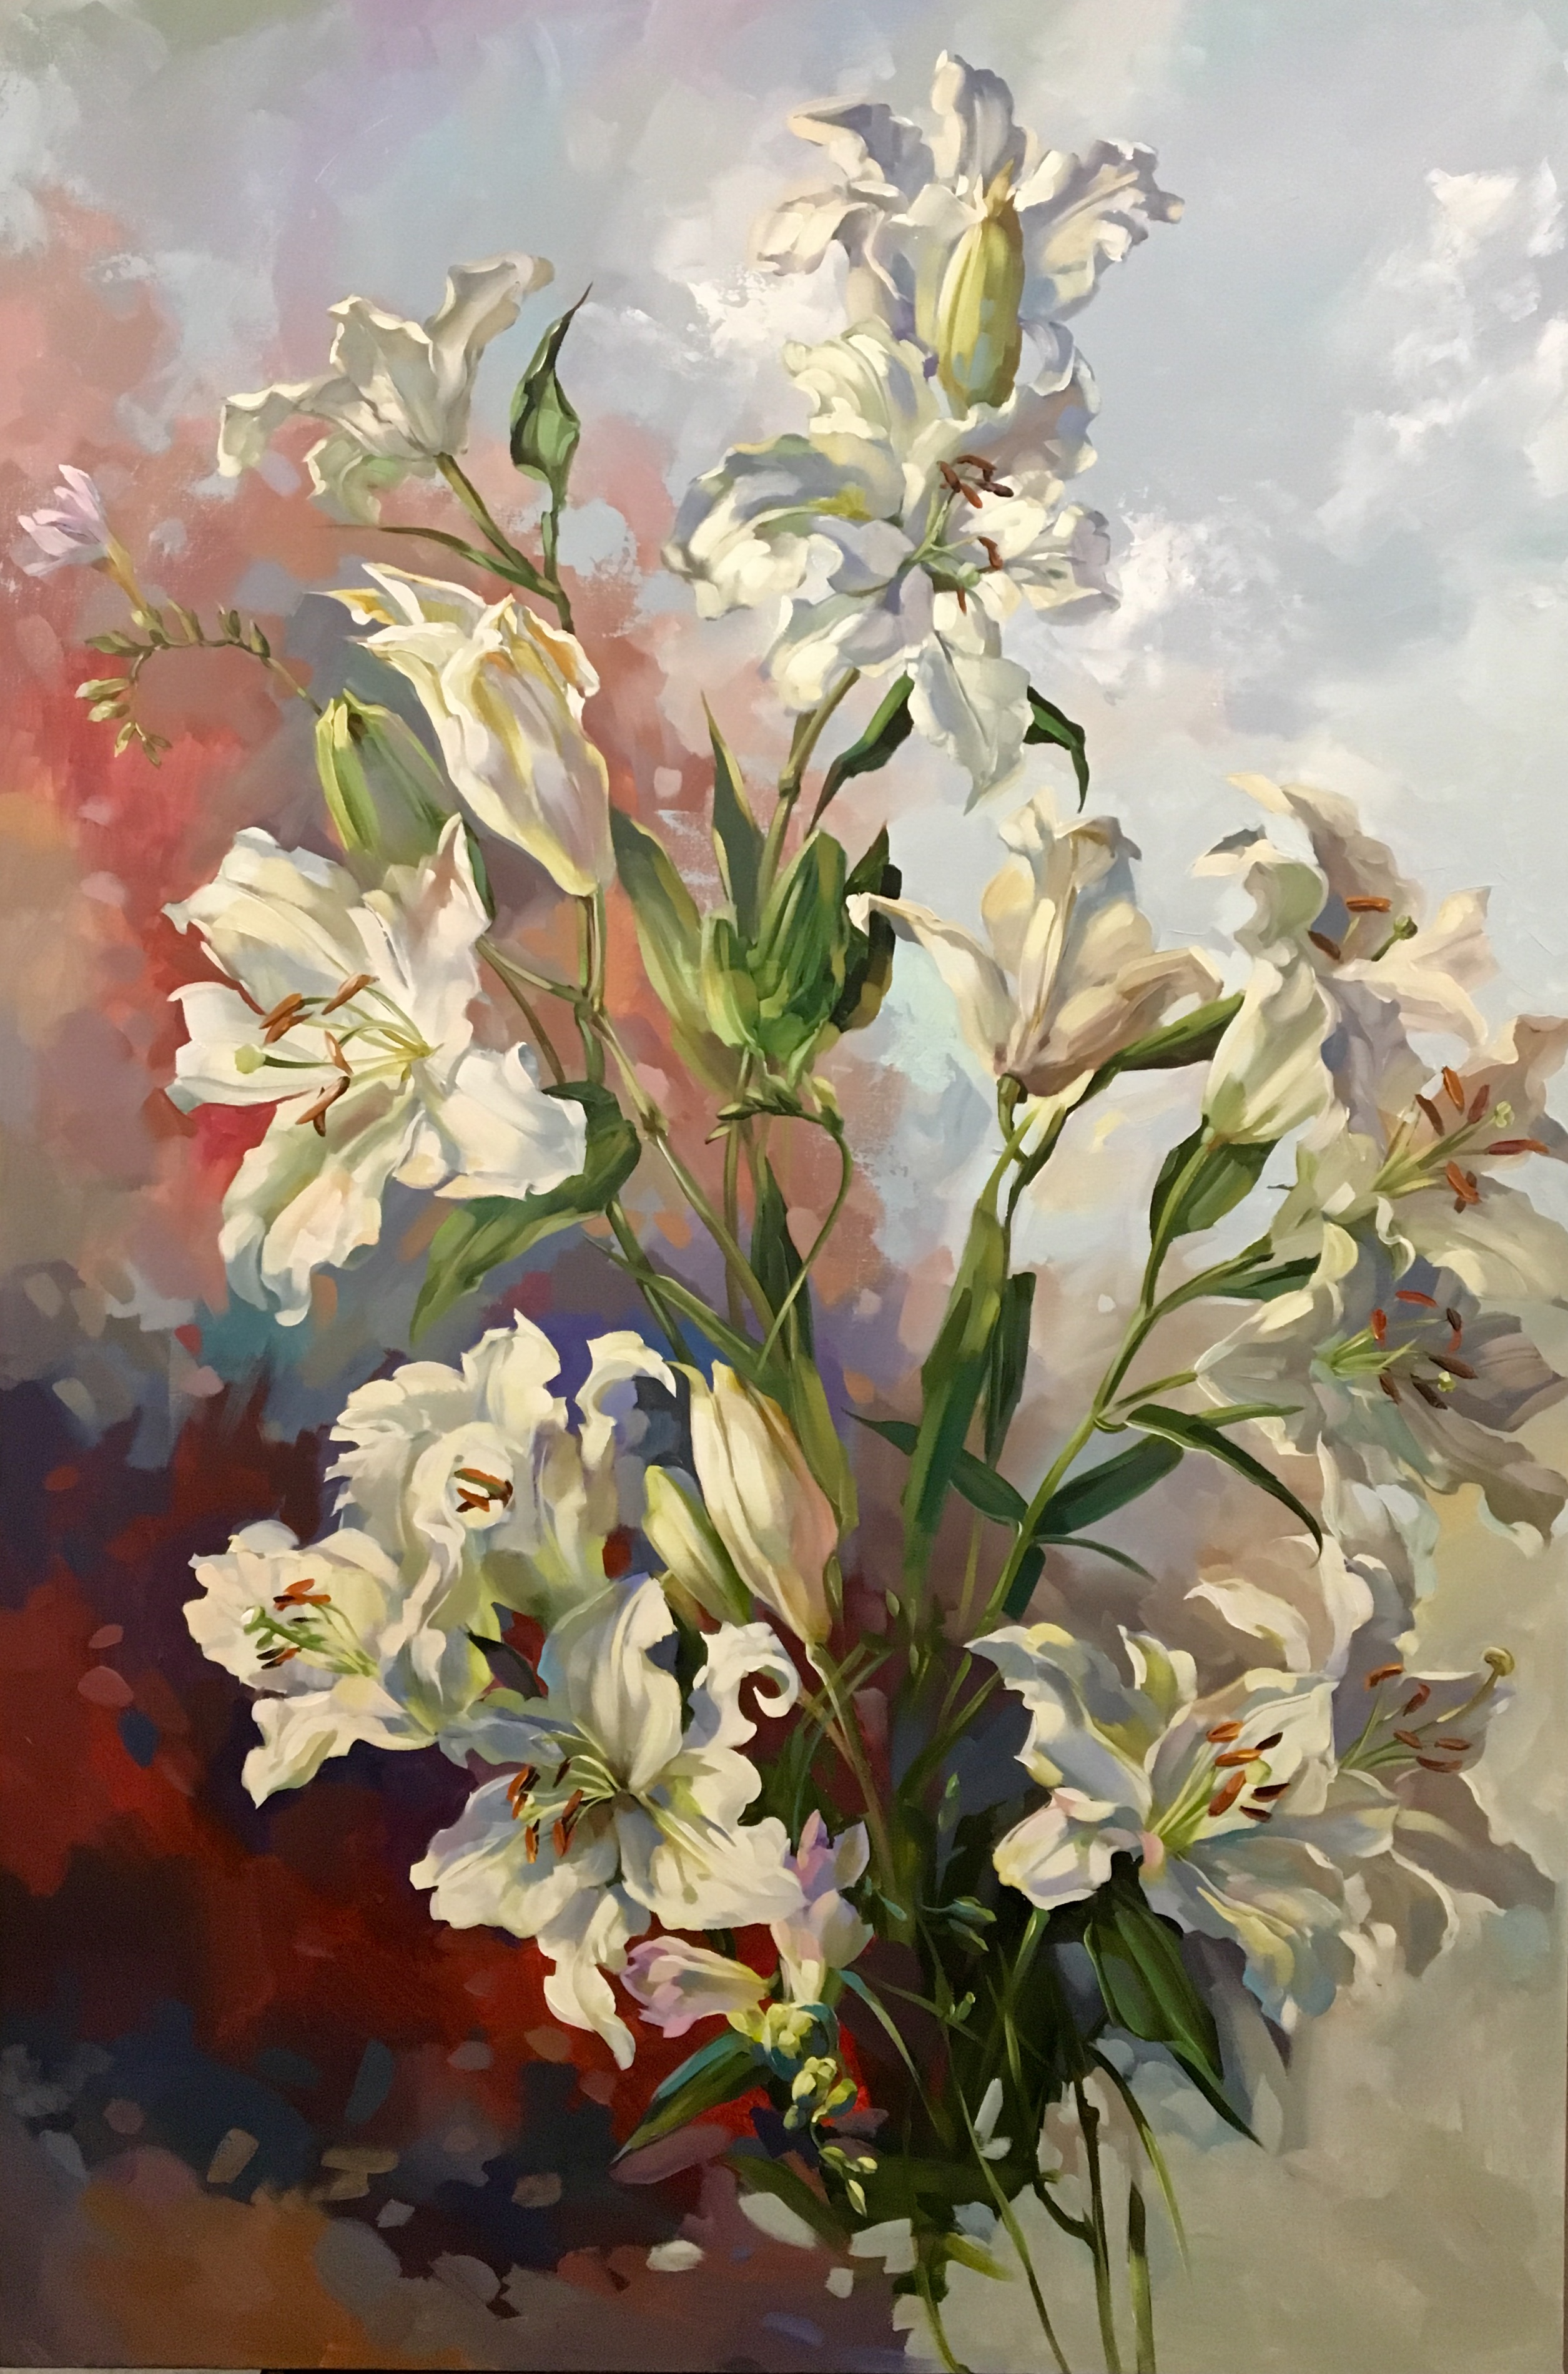 White lilies